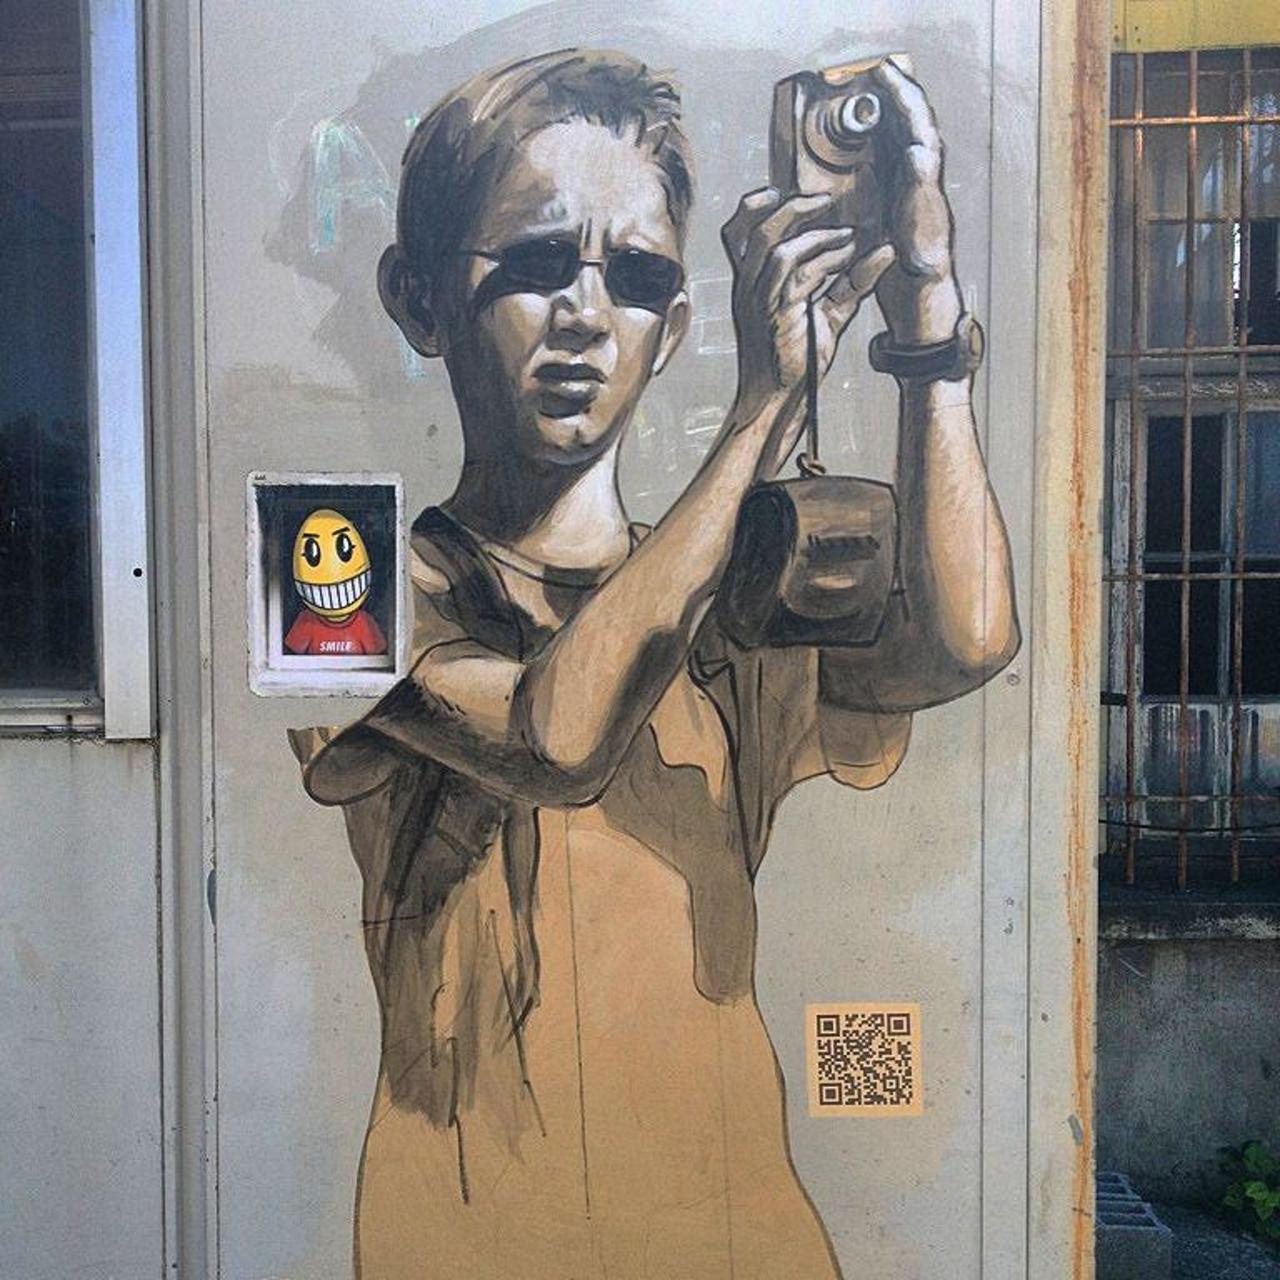 #Paris #graffiti photo by @ceky_art http://ift.tt/1MGWUum #StreetArt http://t.co/T0xHSZFKvL